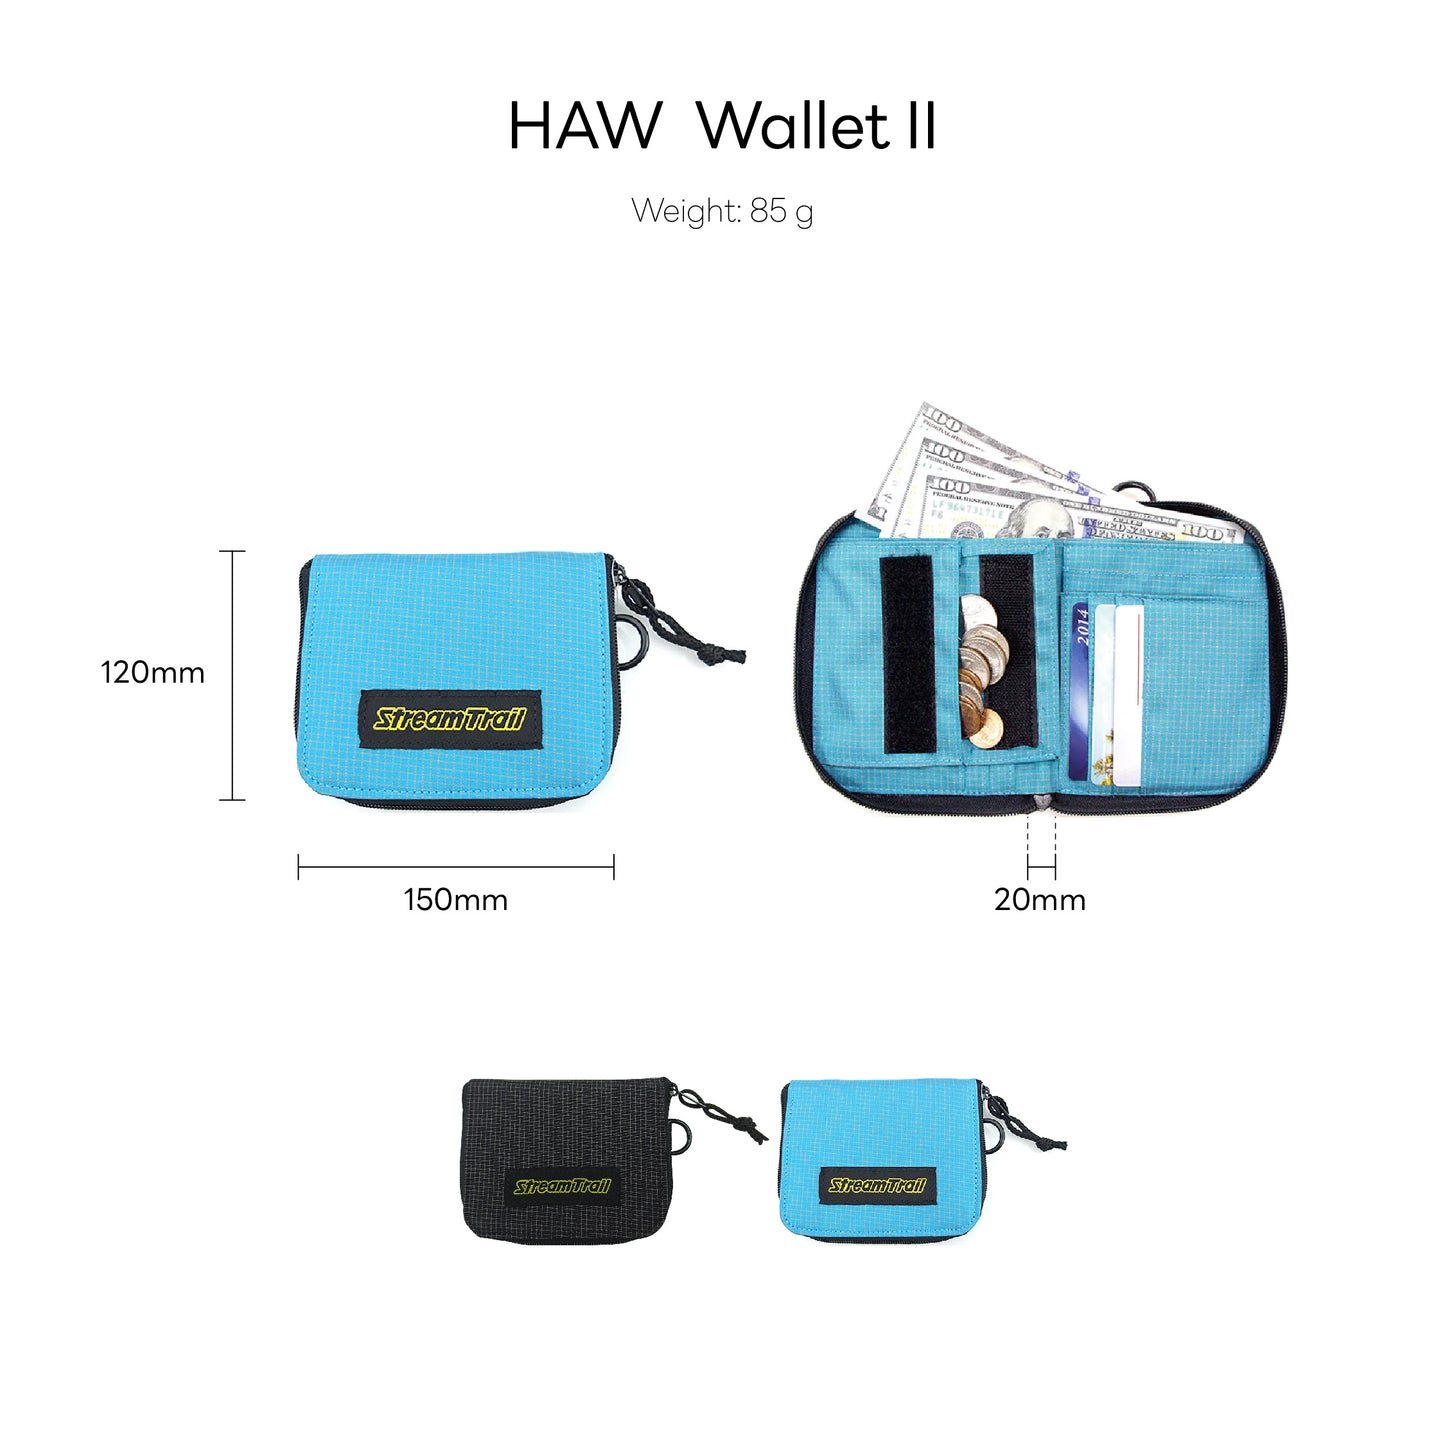 Outlet HAW Wallet II